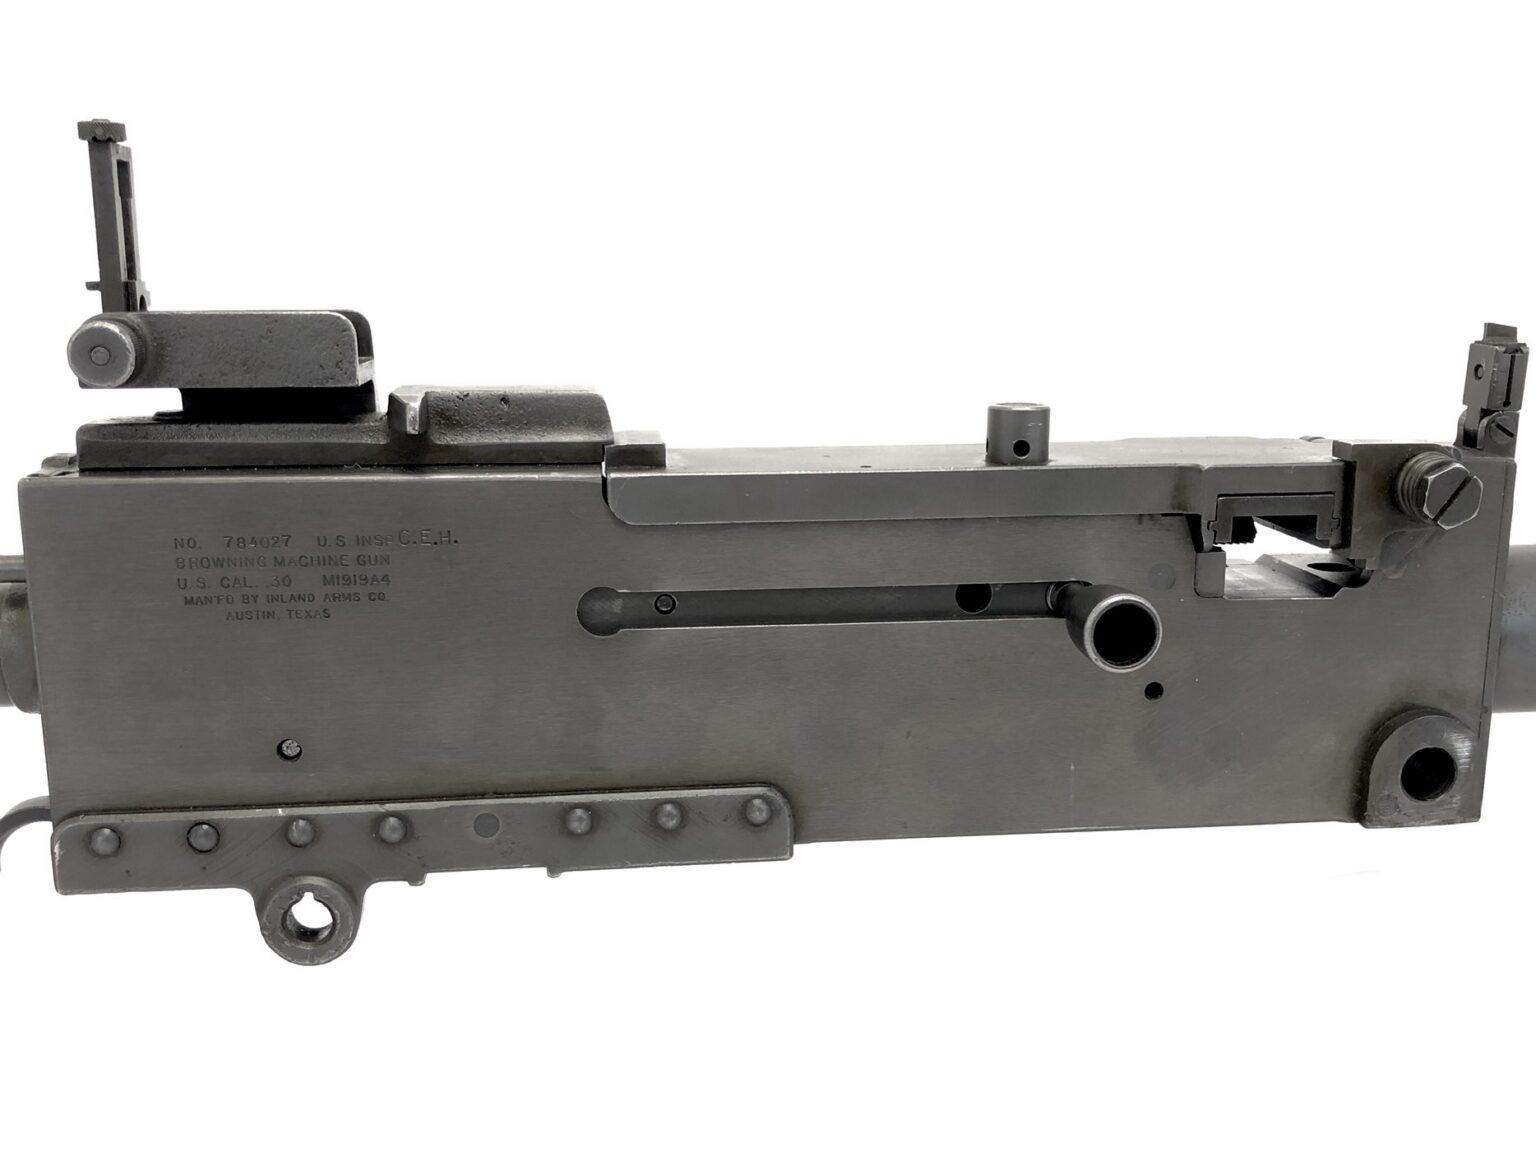 Browning Model 1919a4 30cal Belt Fed Machine Gun